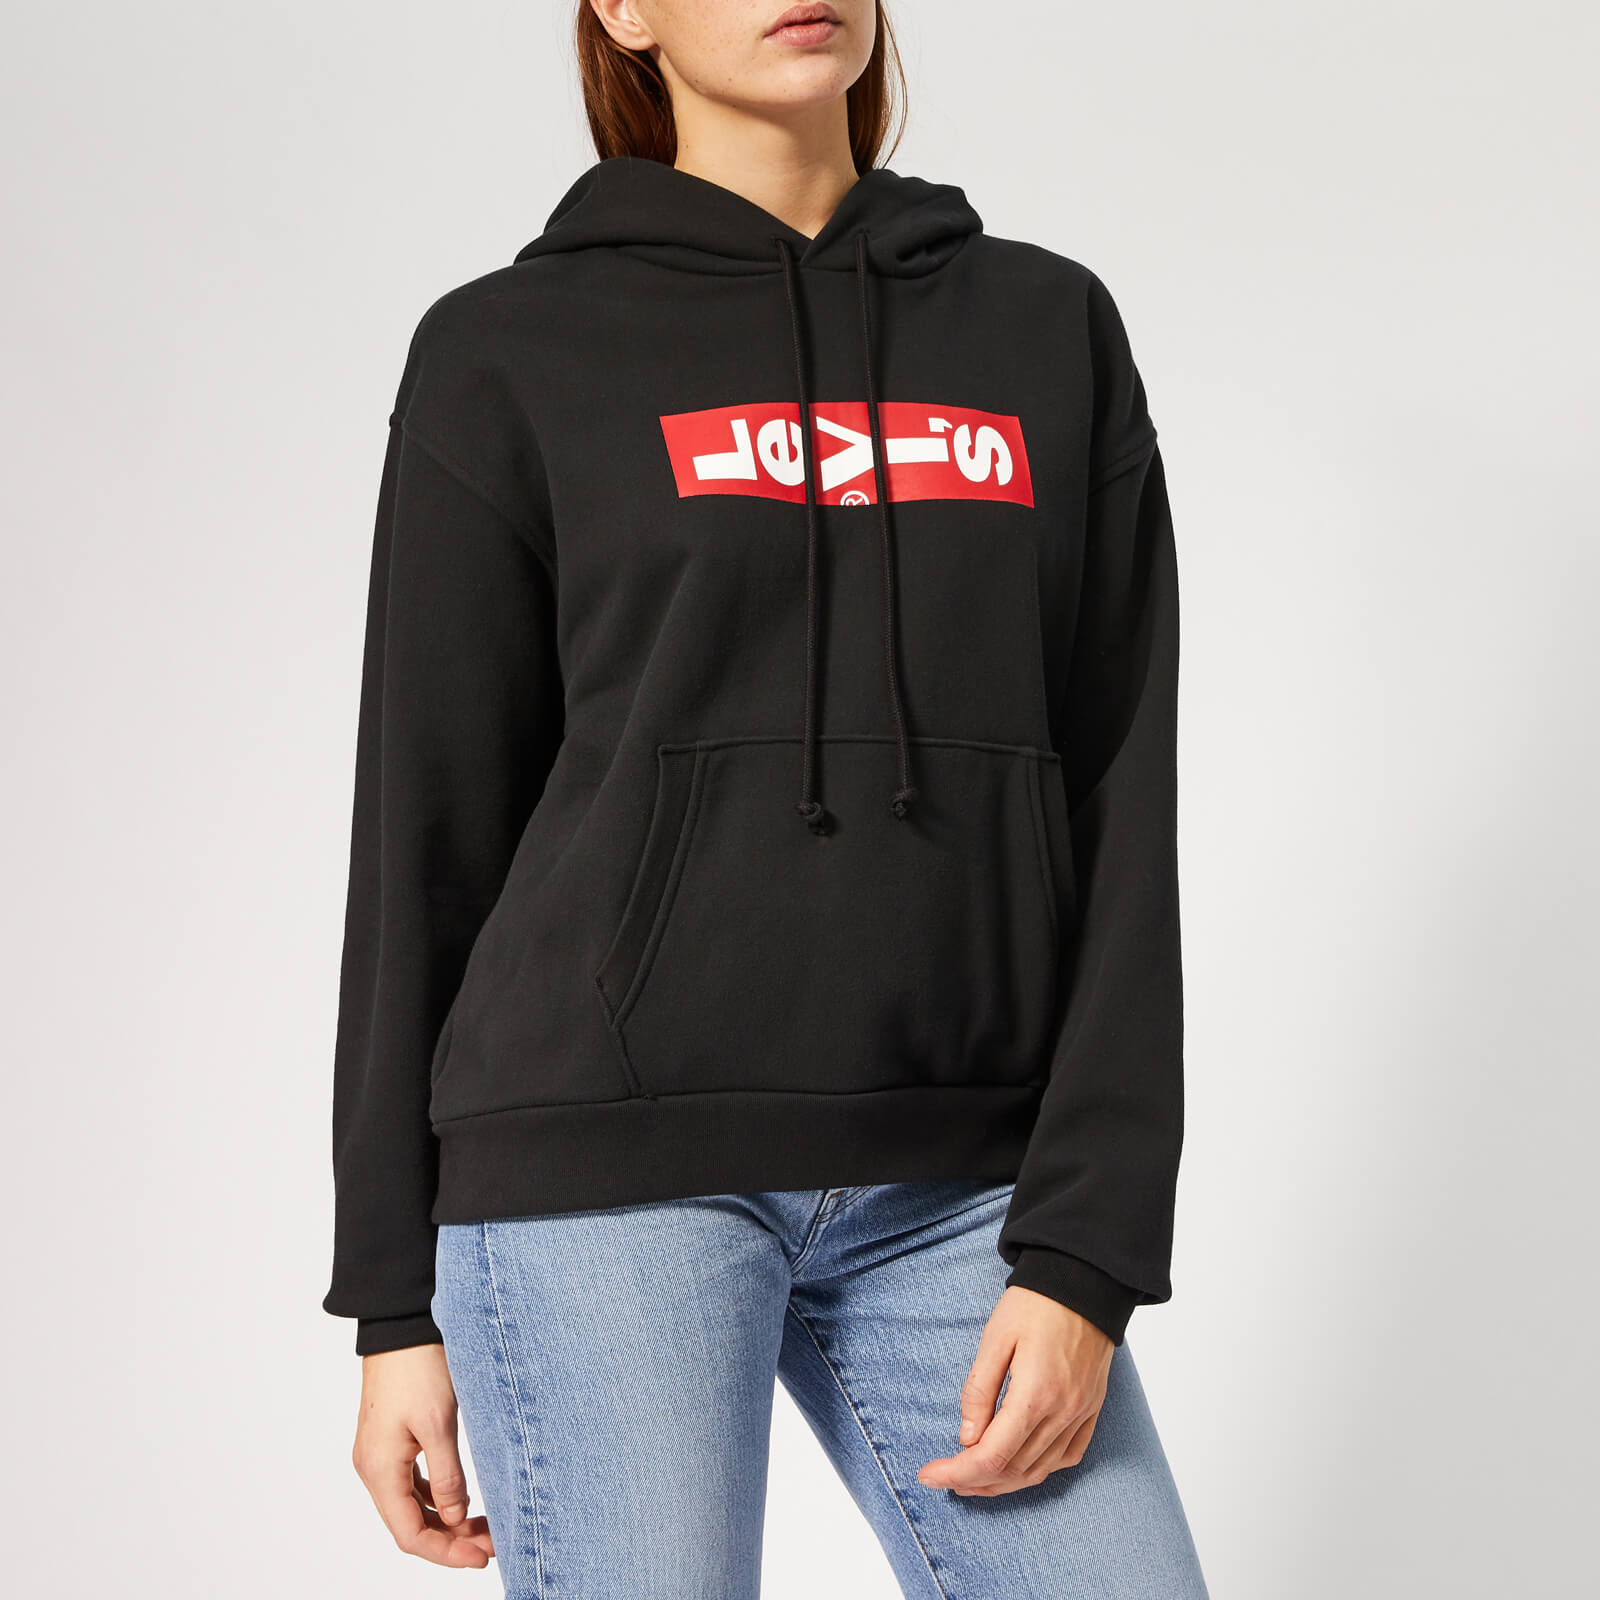 levis hoodie for women